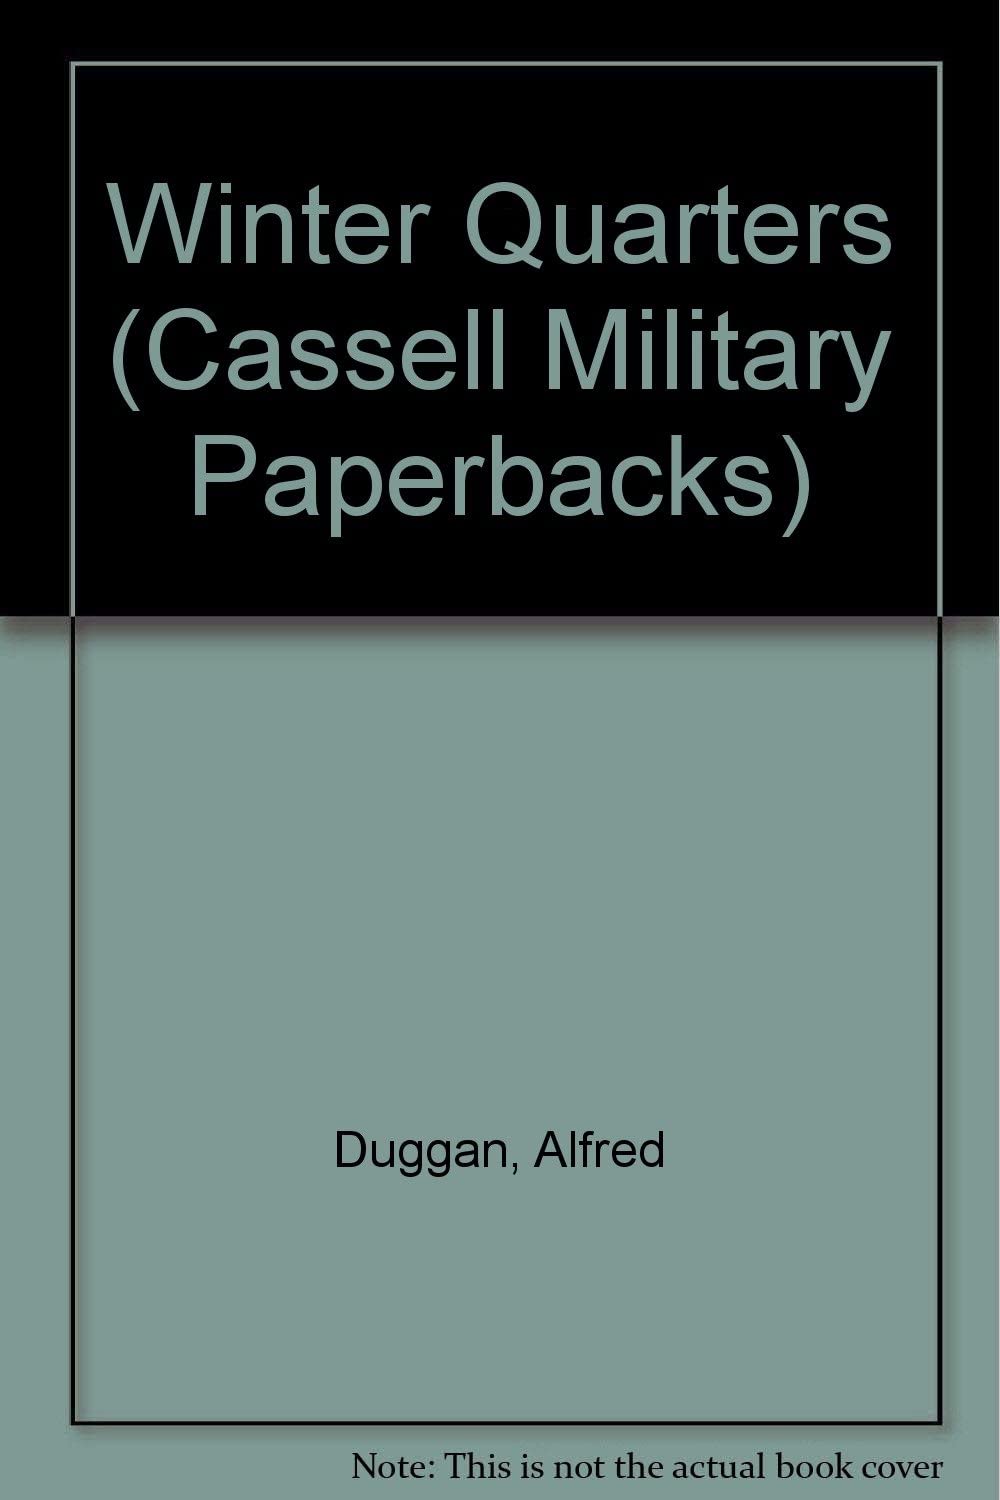 Winter Quarters (Cassell Military Paperbacks)